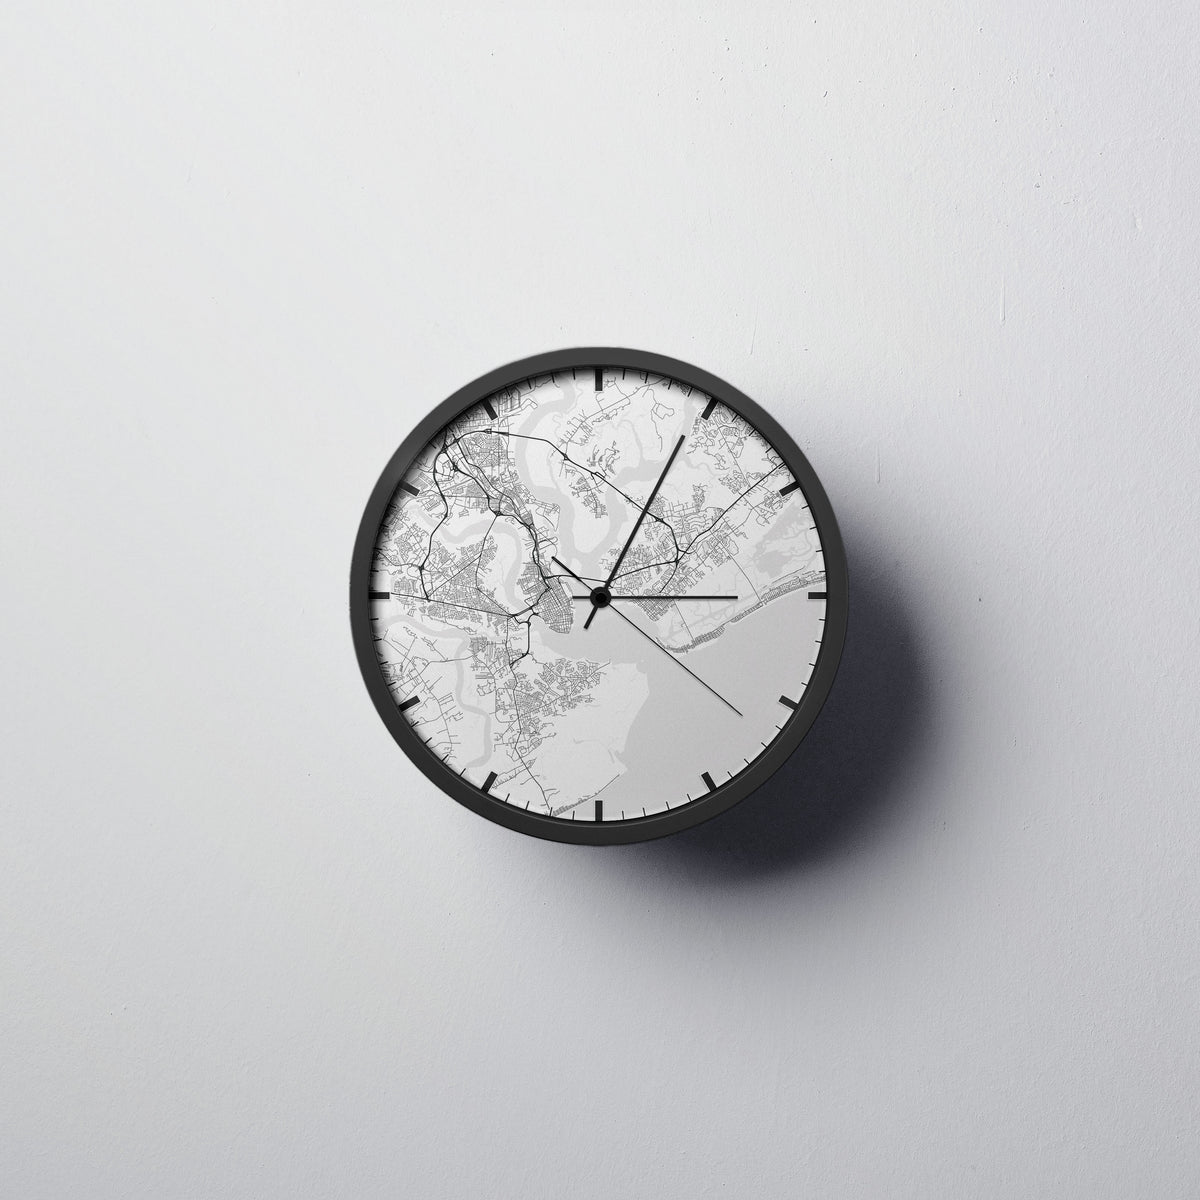 Charleston Wall Clock - Point Two Design